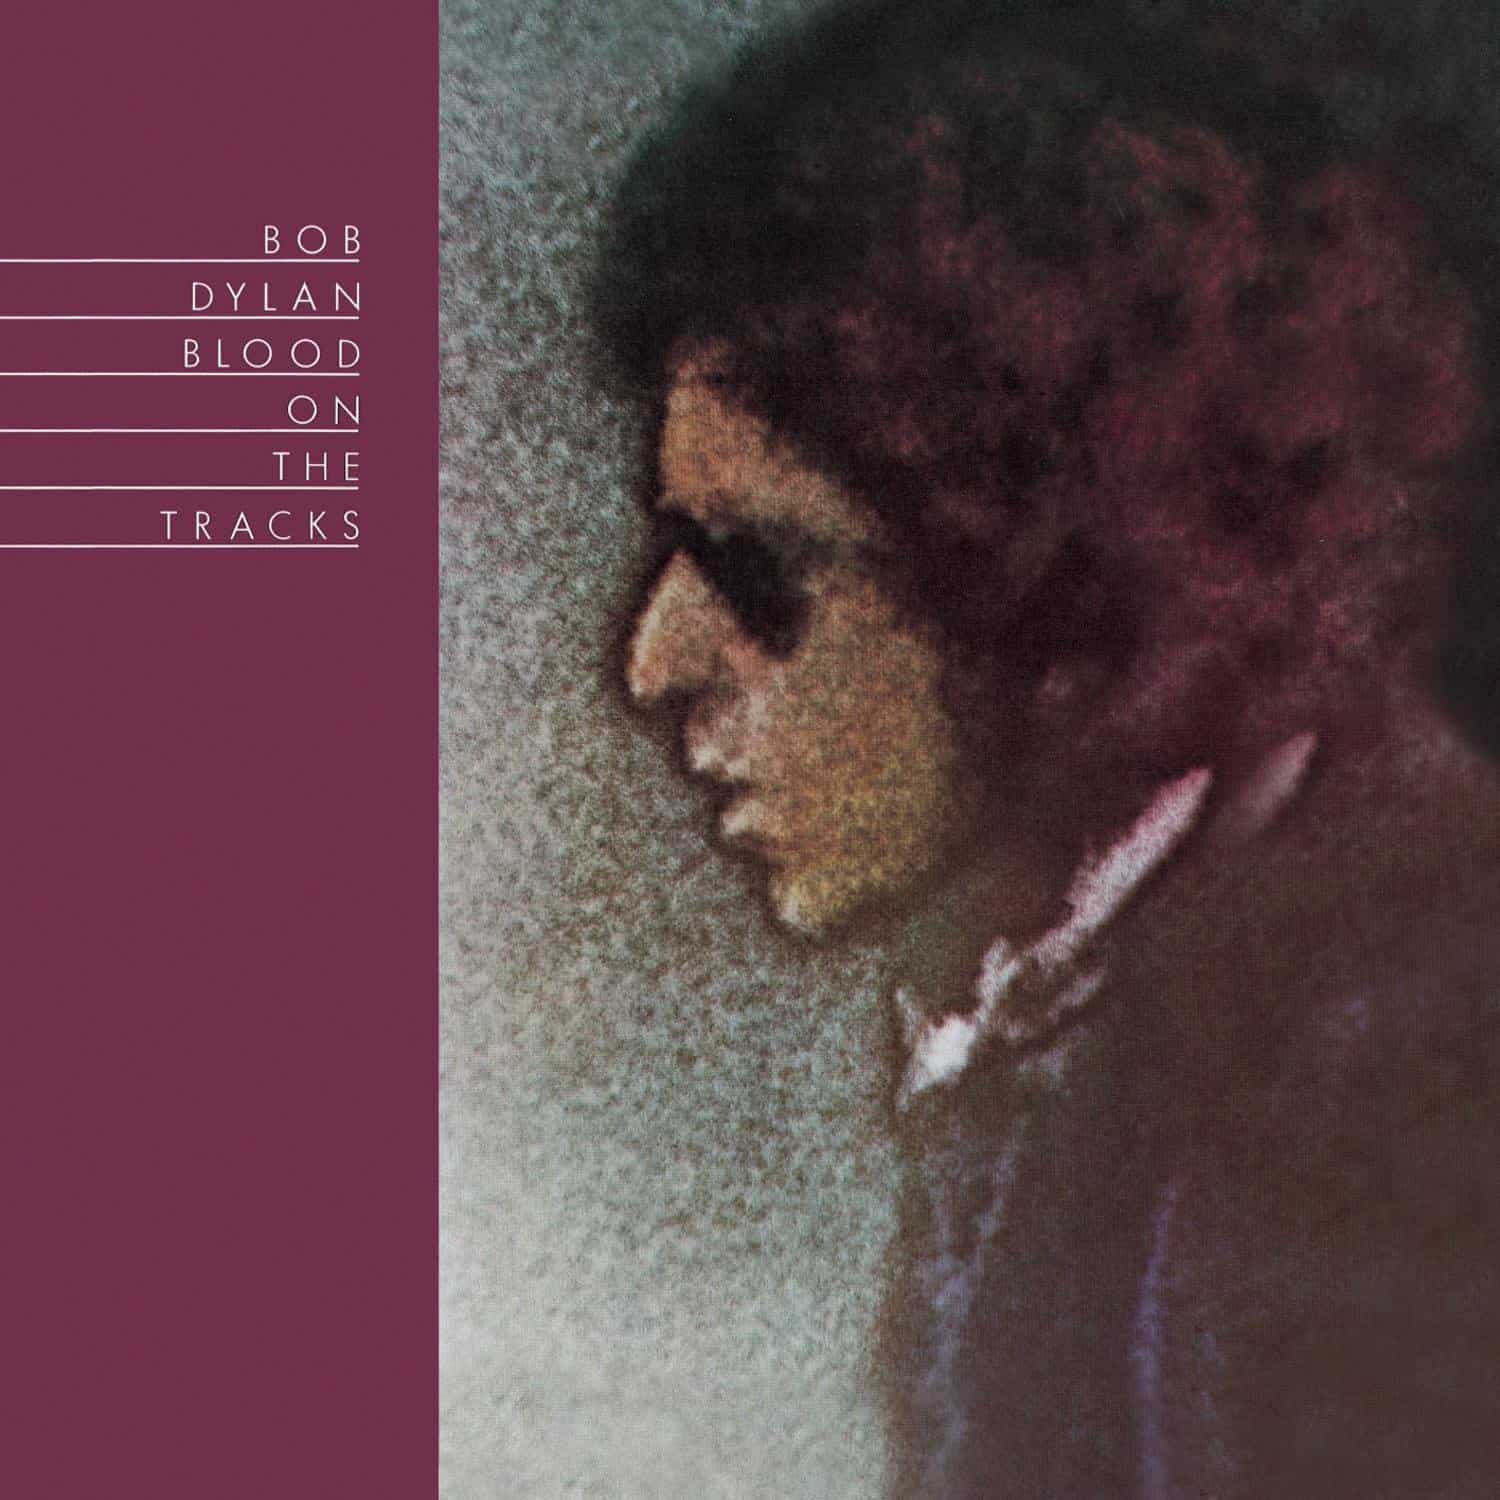 Bob-Dylan-Blood-On-The-Tracks-vinyl-record-album-front